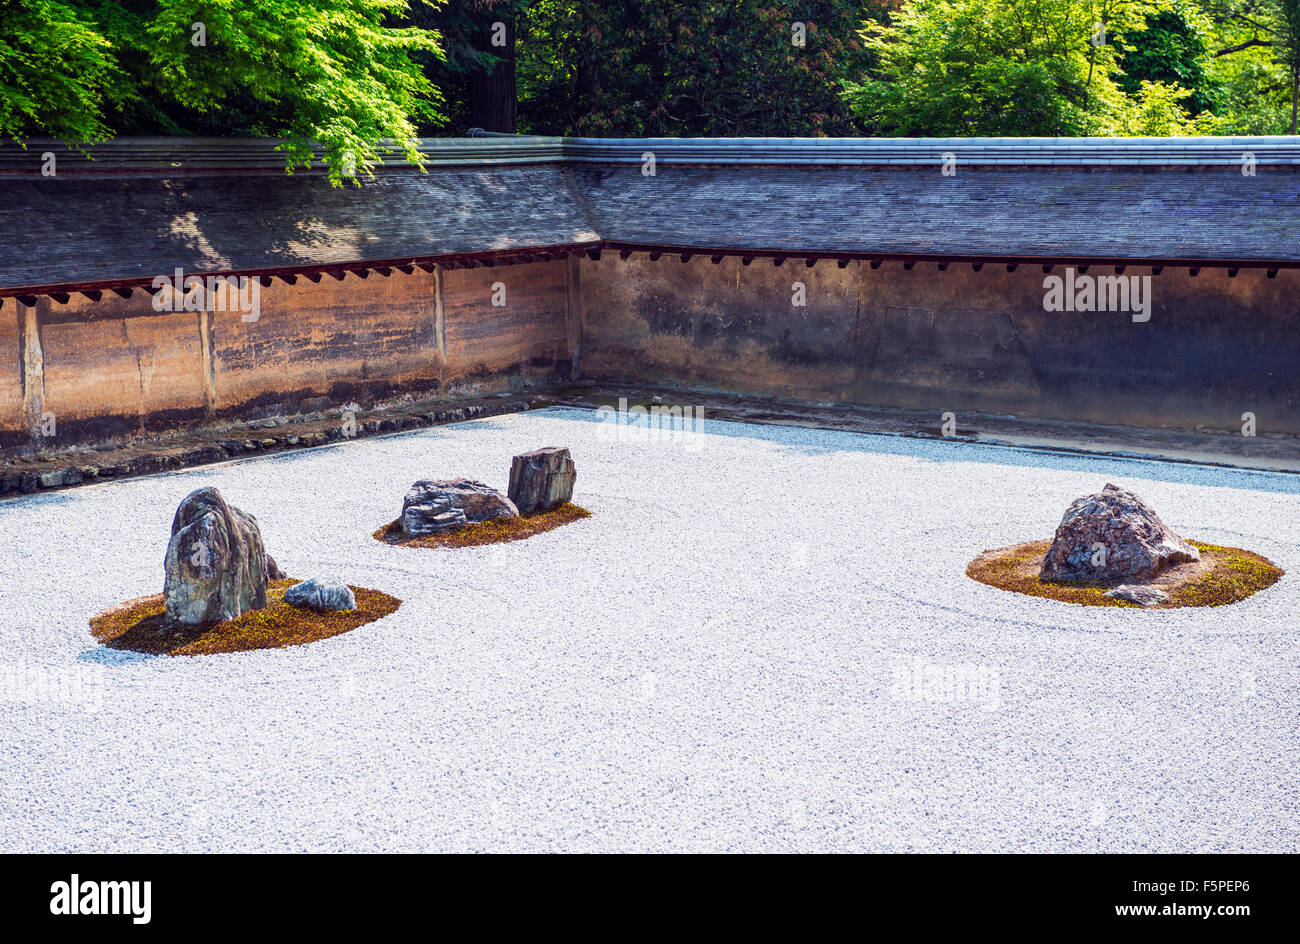 The rockgarden, sekitei, at Ryōan-ji Temple in Kyoto Japan Stock Photo